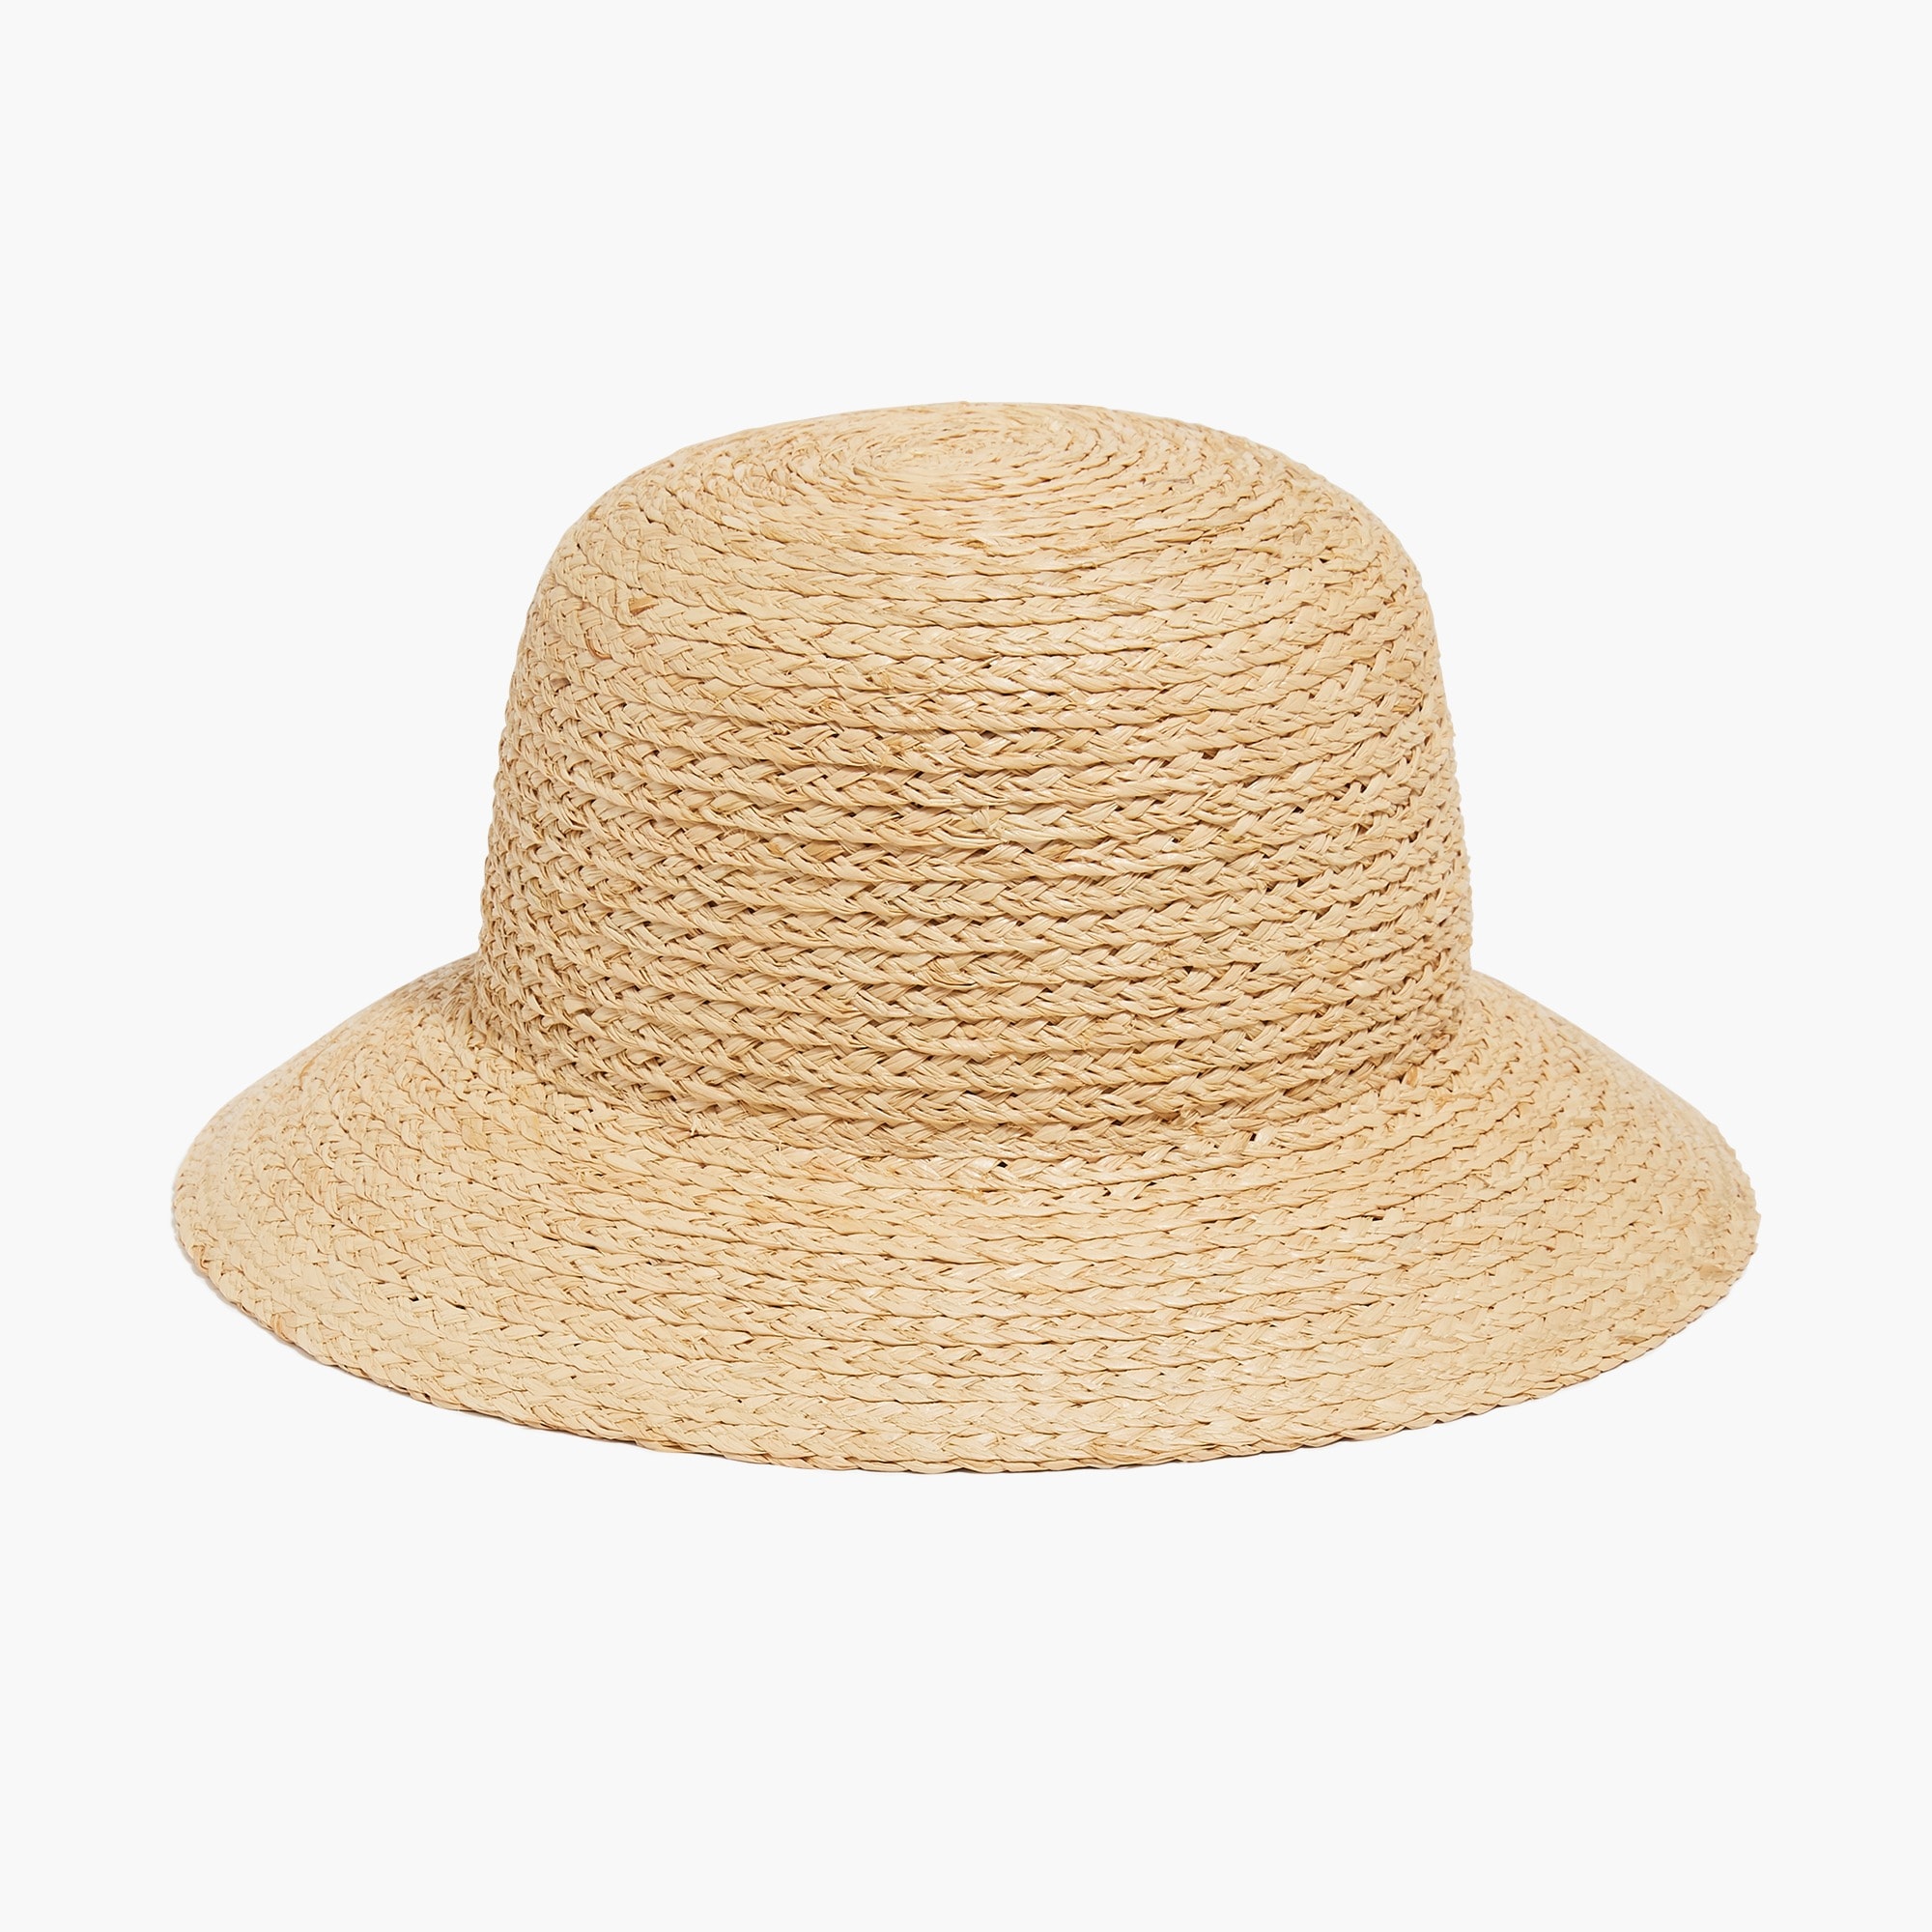 Jcrew Straw bucket hat